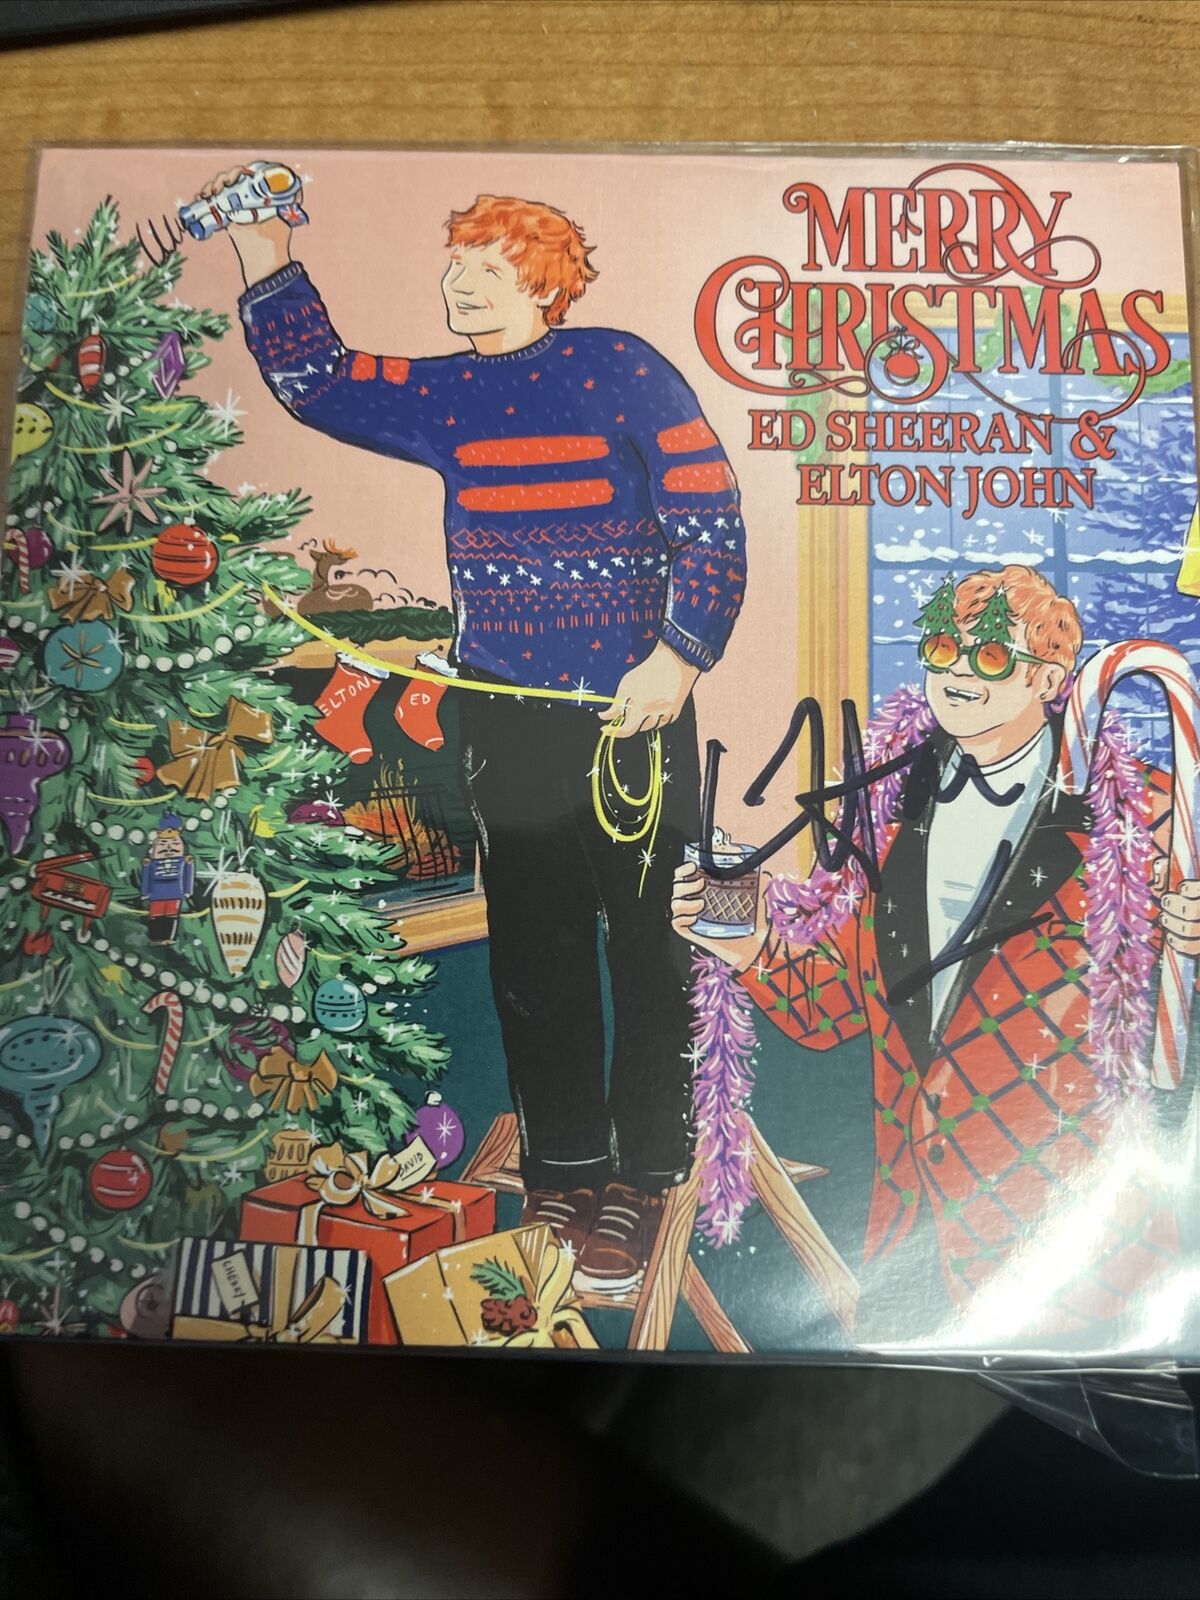 ELTON JOHN Merry Christmas Ed Sheeran & Elton John Autographed 2 DVD